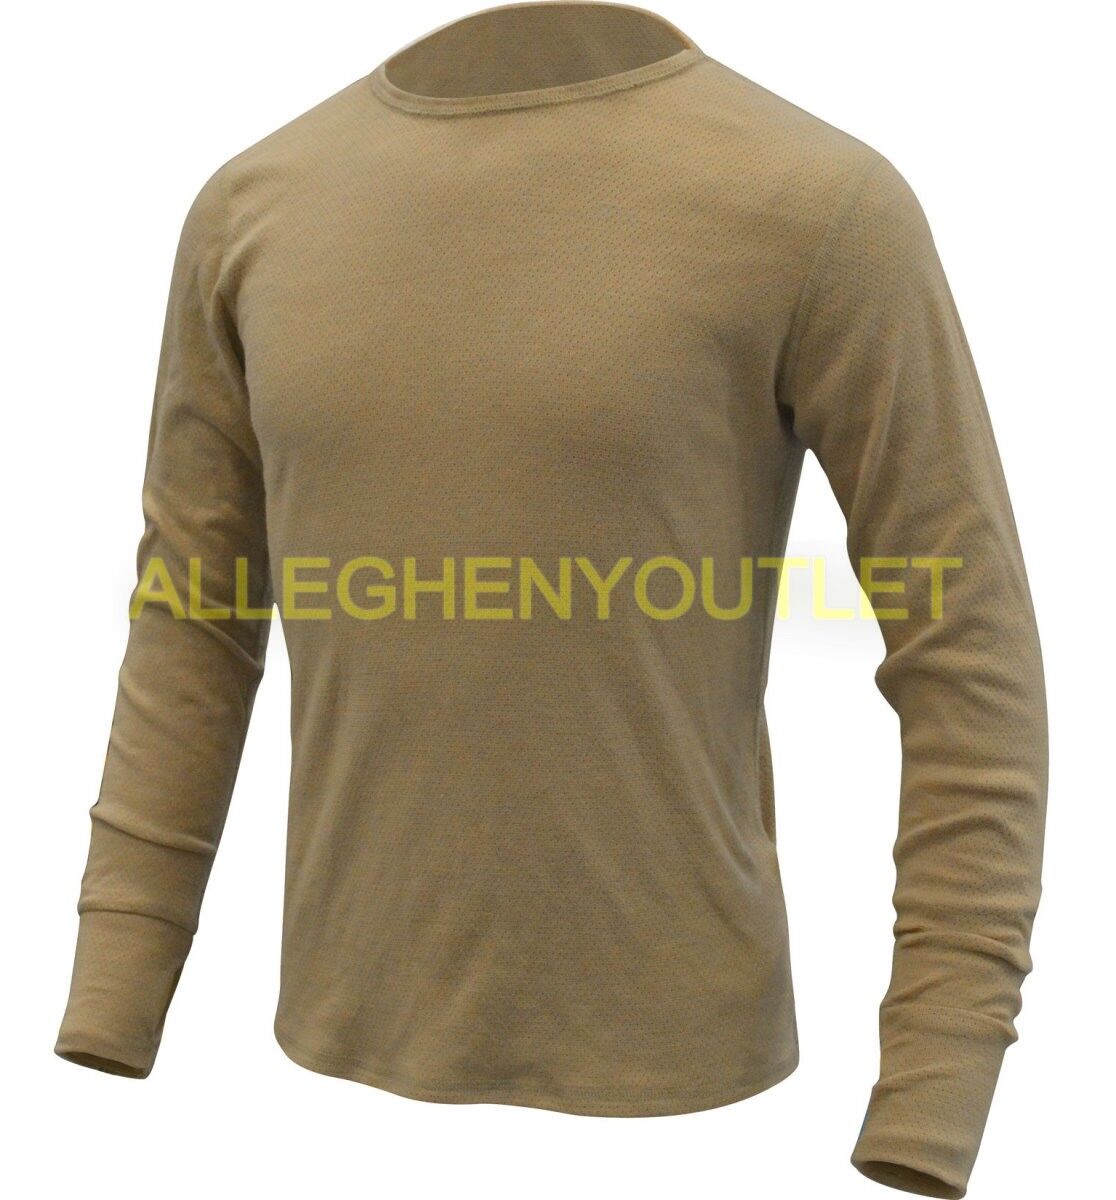 USGI Peckham FR Flame Resistant (FREE) Base Layer Long Sleeve Shirt Sand S/S NEW